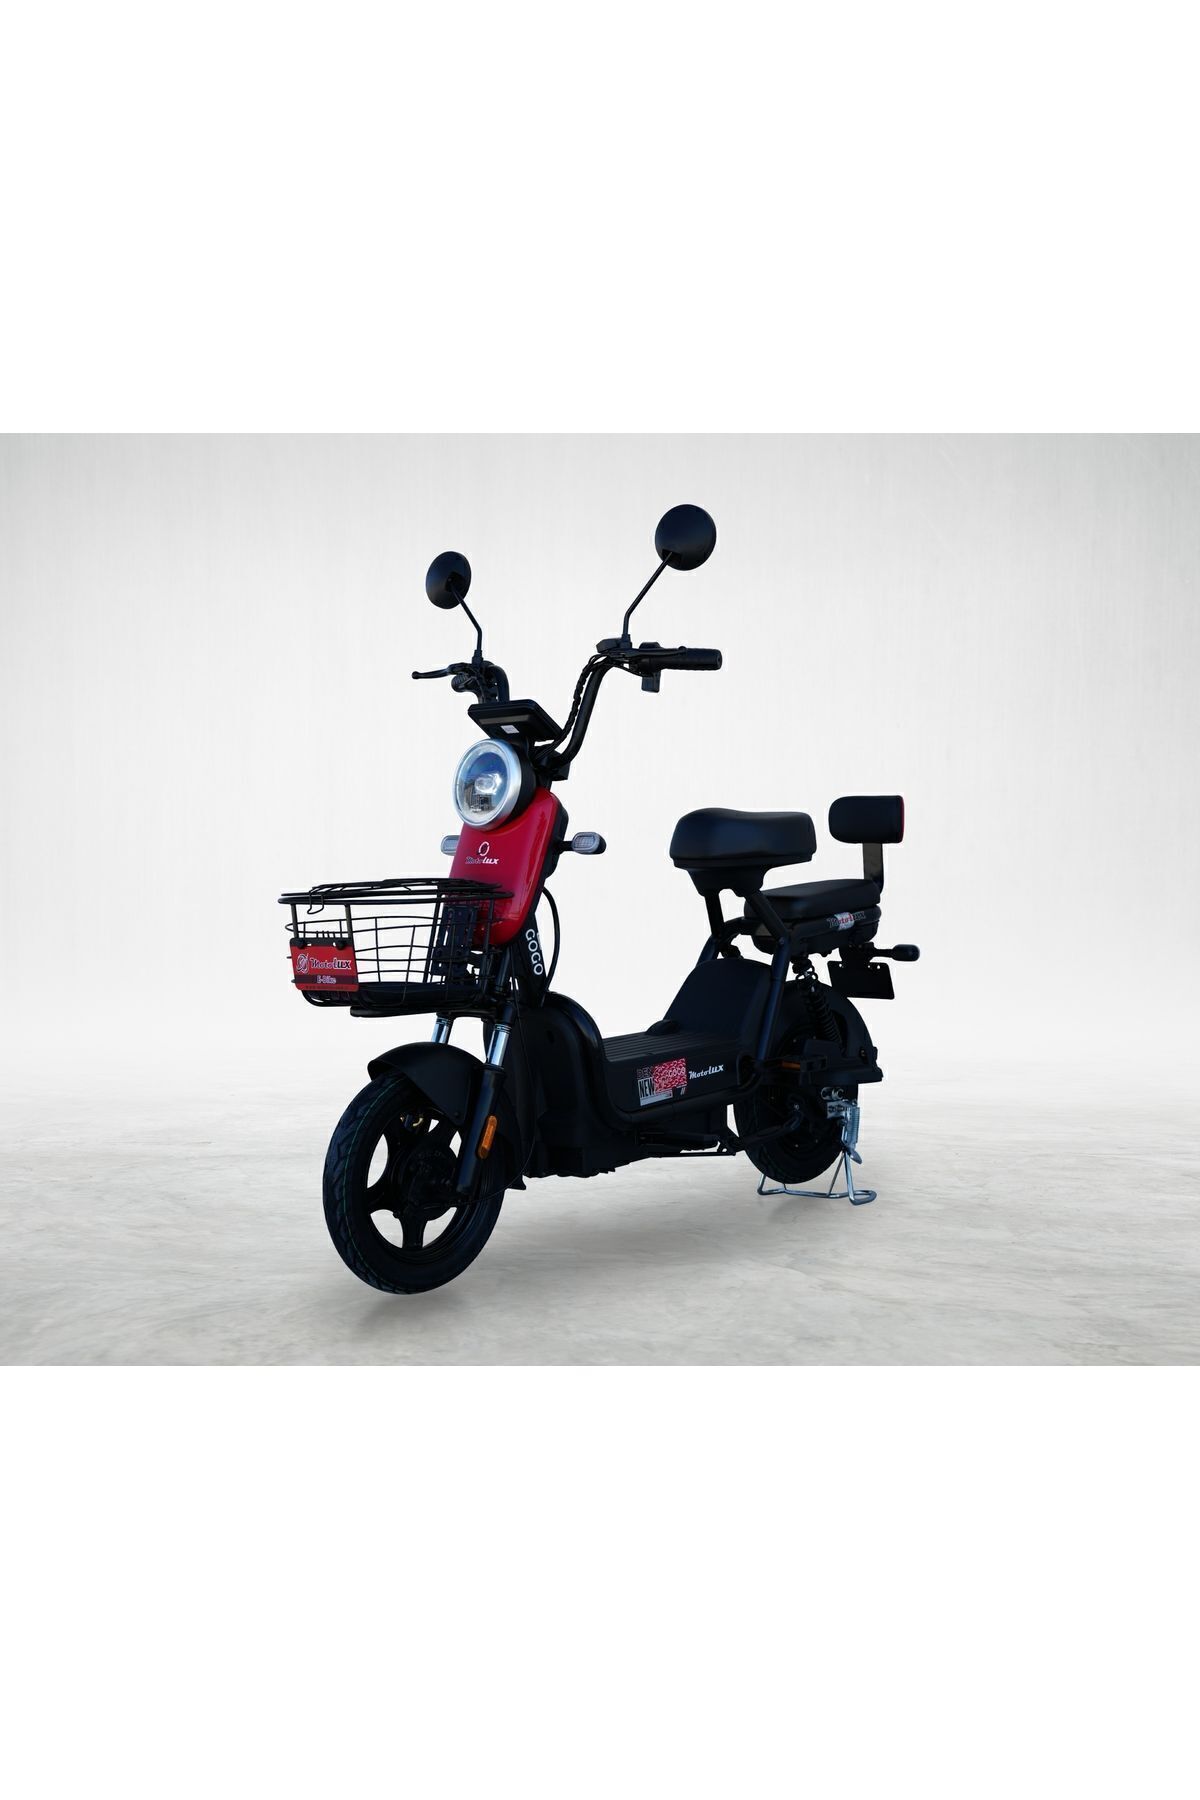 Motolux Gogo 4 Akülü Elektrikli Motosiklet - Kırmızı ( Gogo)